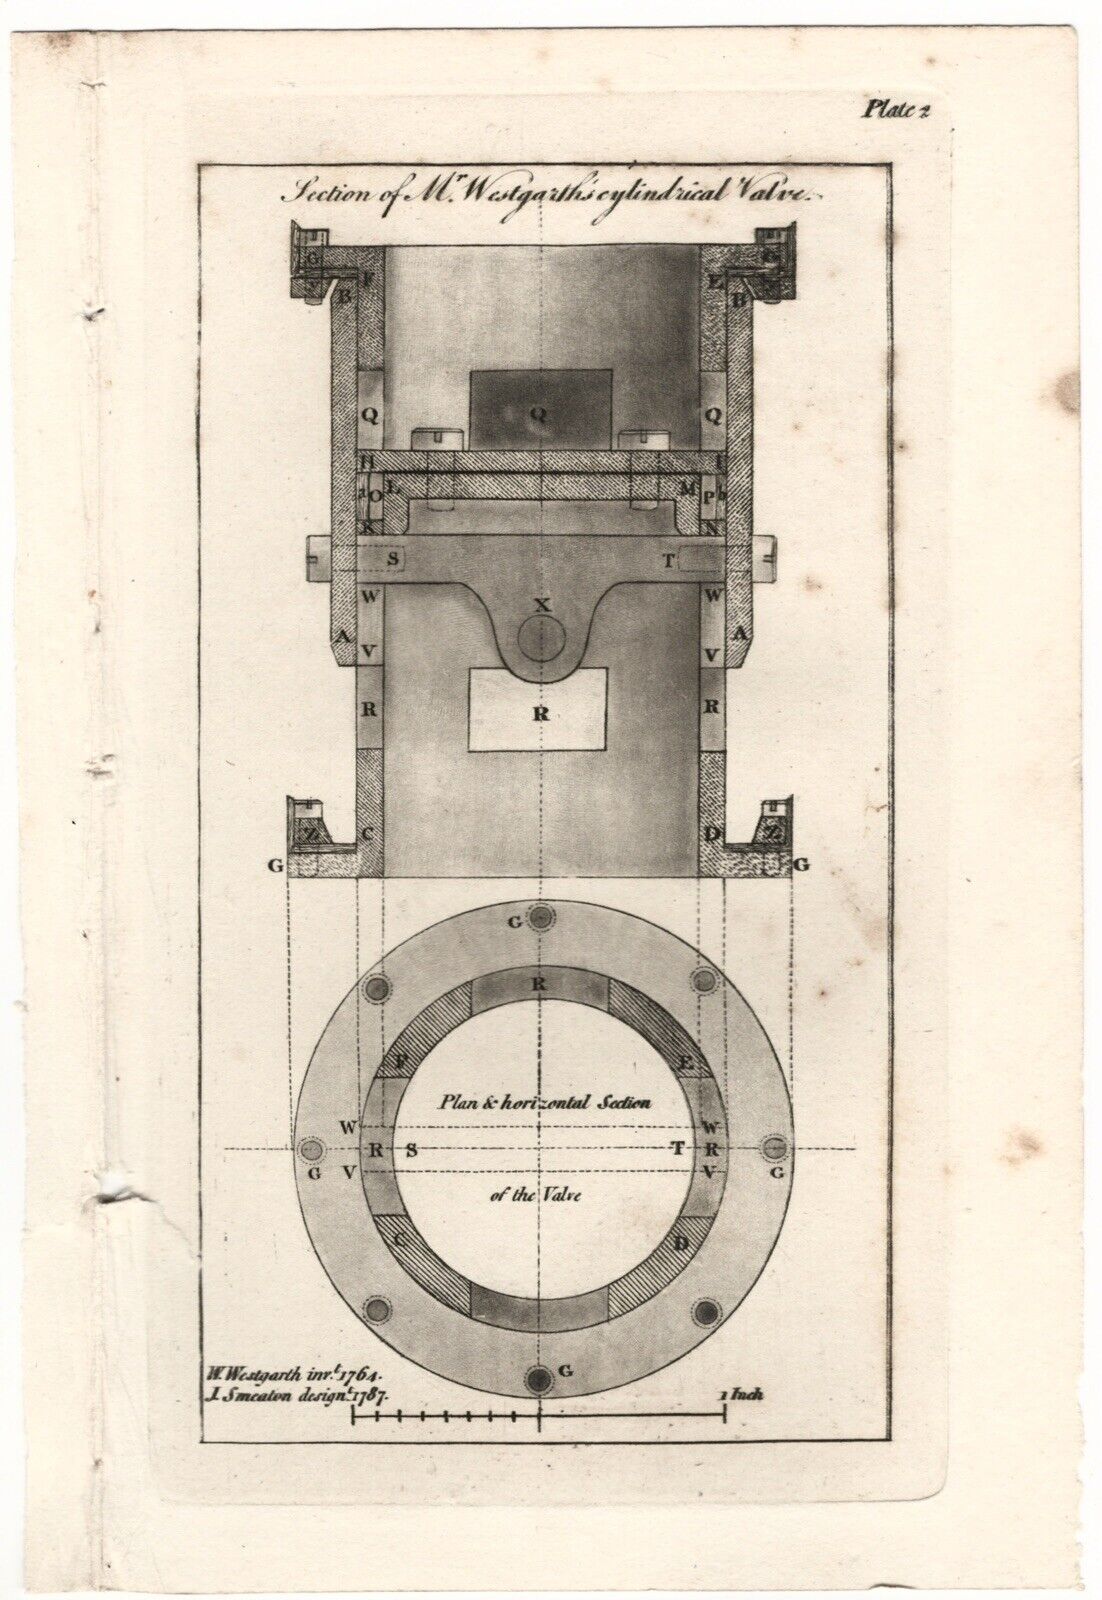 1789 ORIGINAL BOOK PLATE SECTION WESTGARTHS CYLINDRICAL STEAM ENGINE VALVE